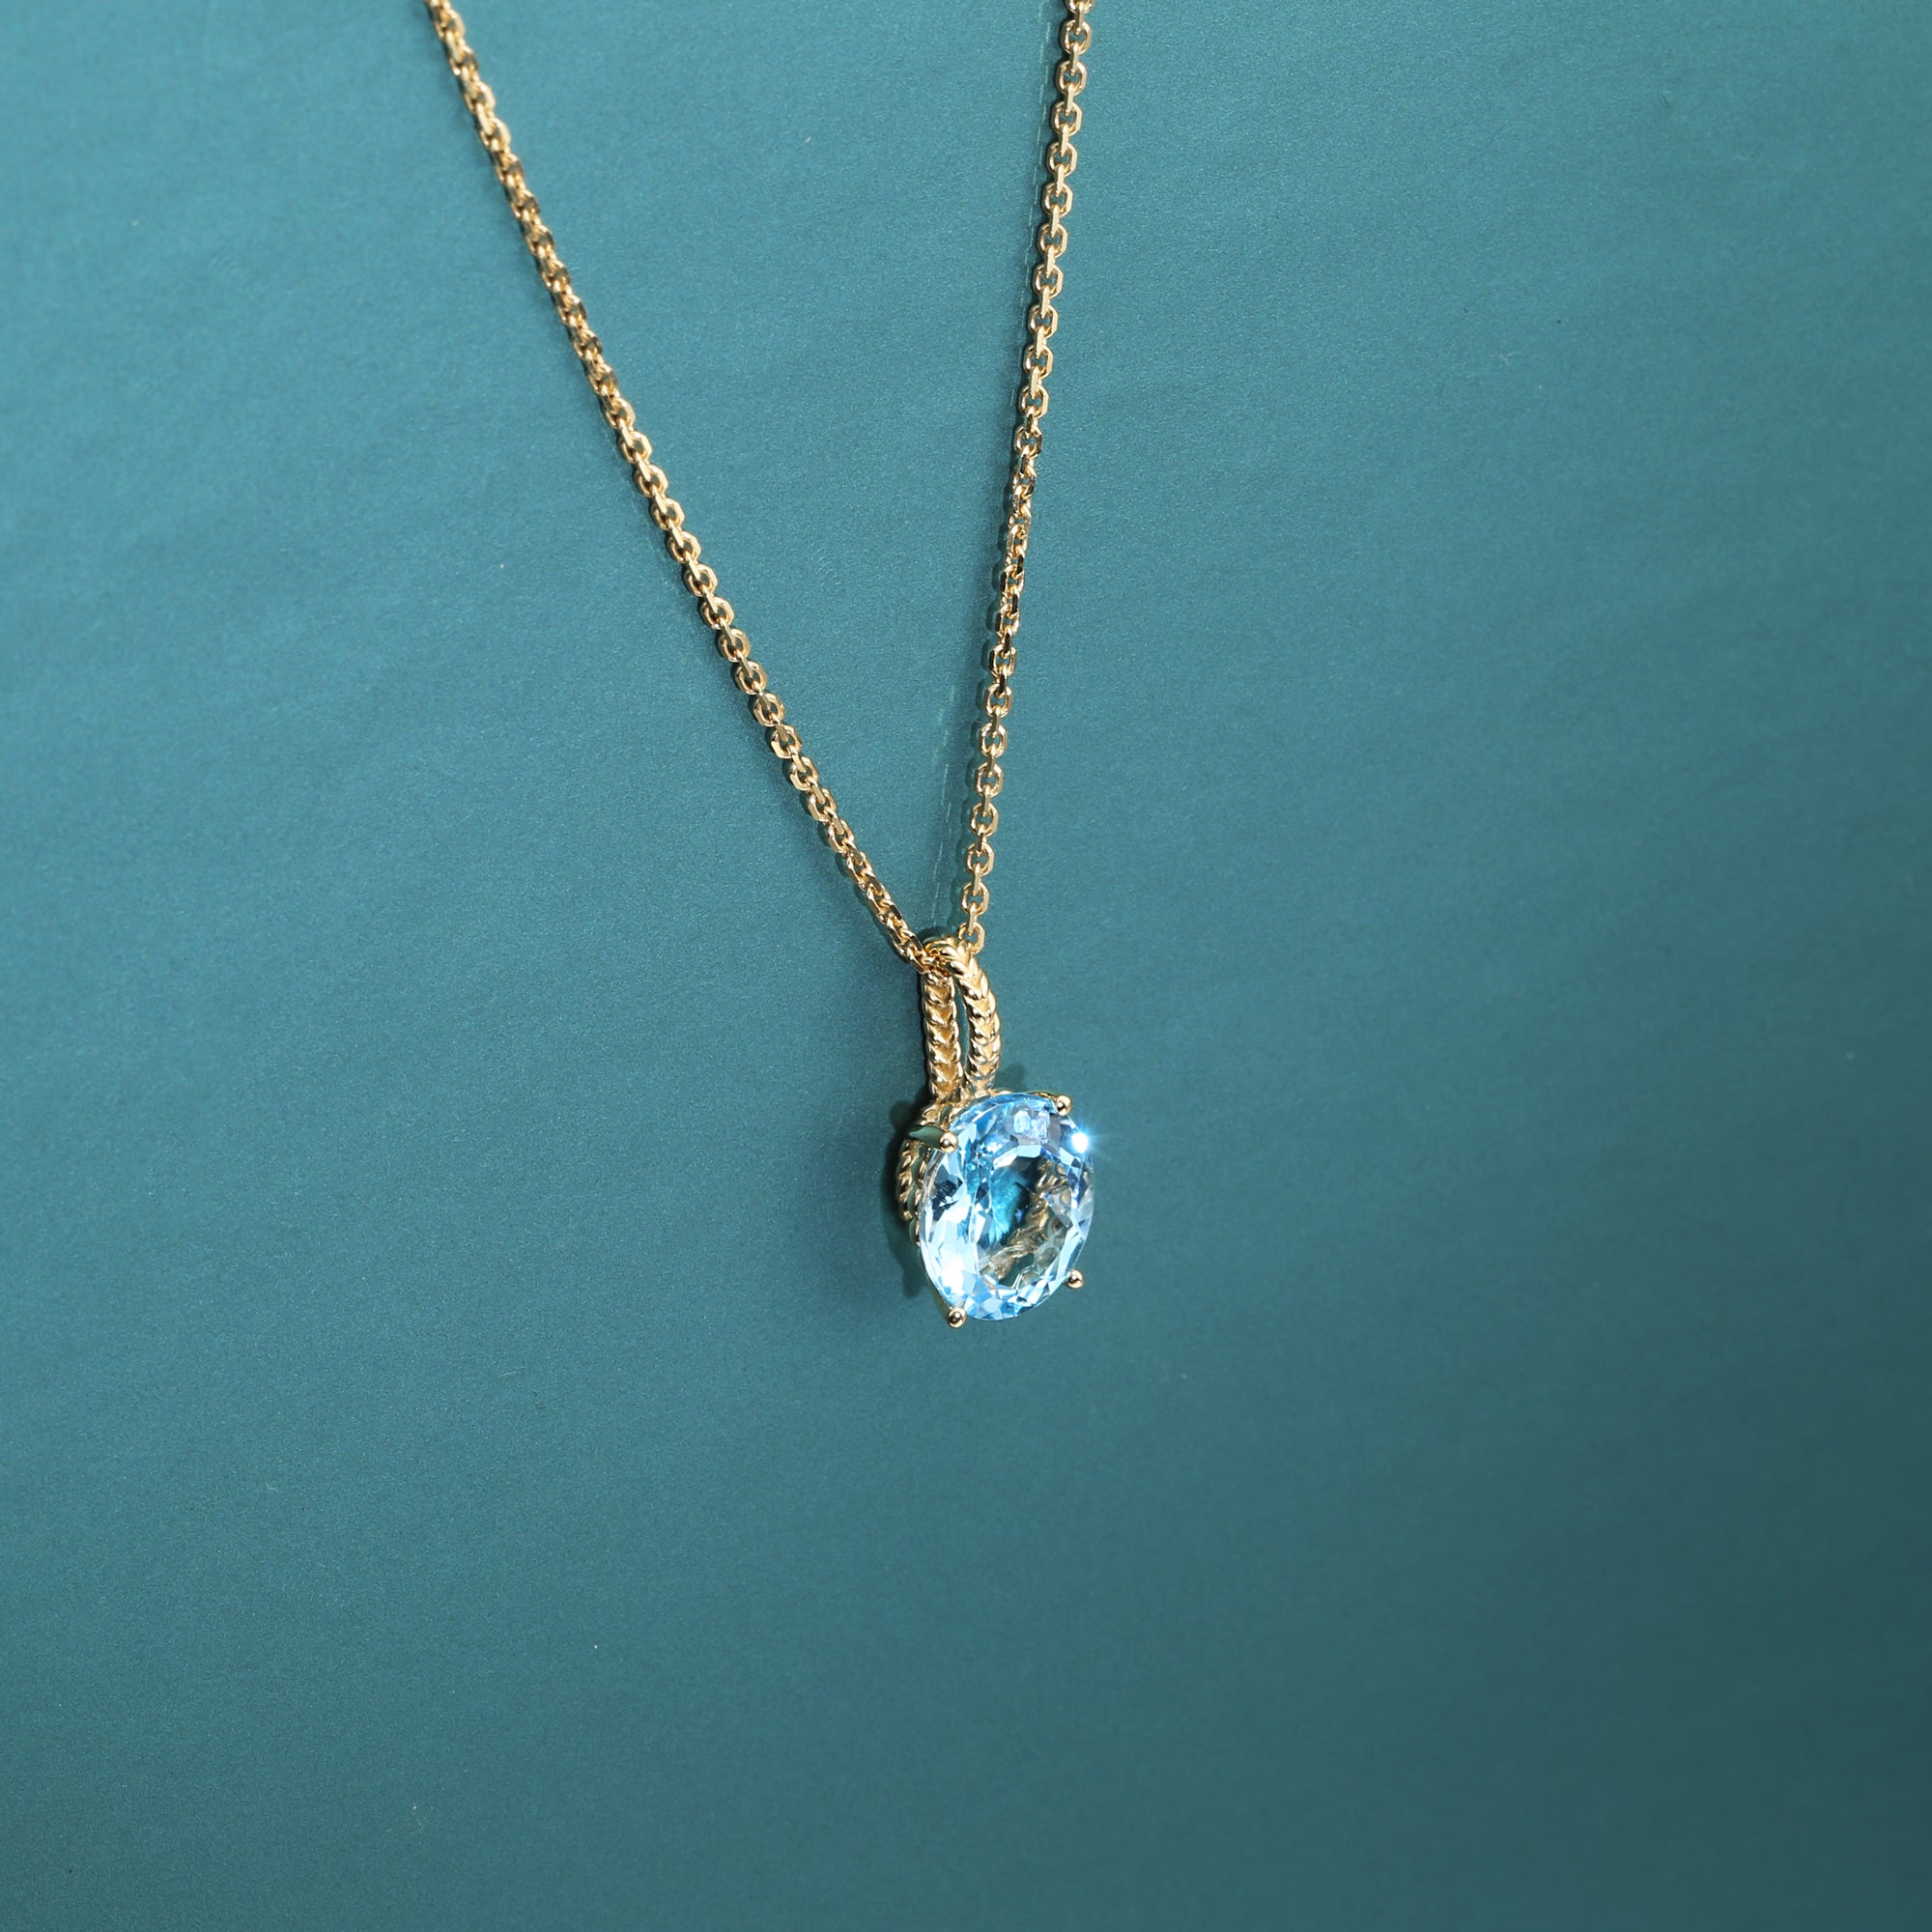 14k Yellow Gold Topaz Necklace, Brilliant Sky Blue 6 Carat Oval Shaped Topaz Gemstone Pendant